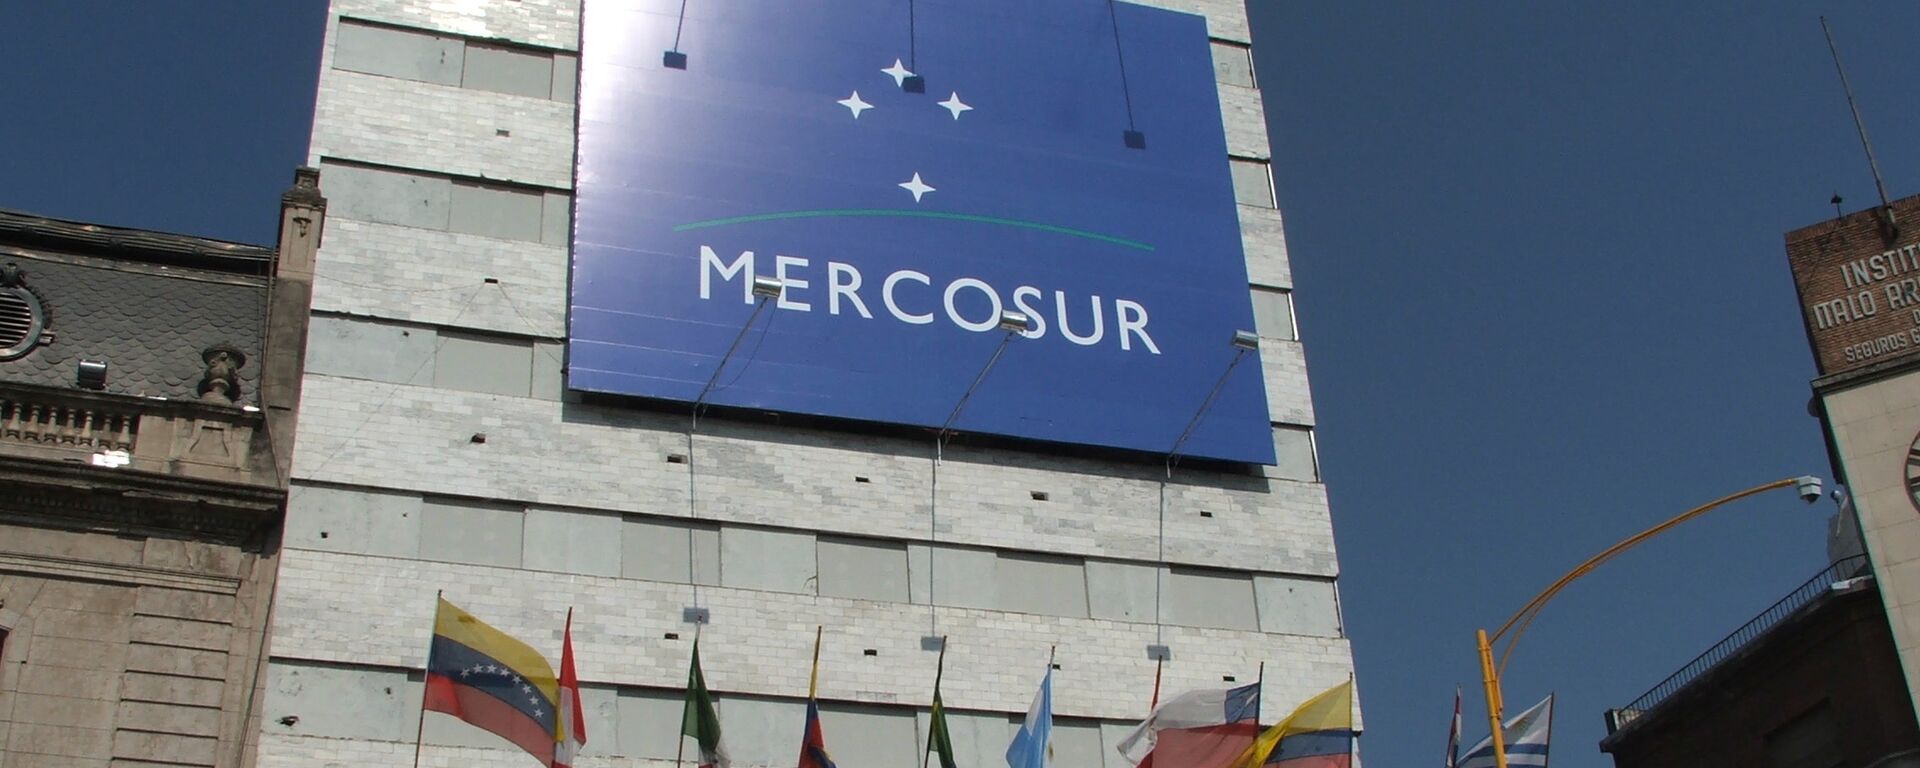 Sede del Mercosur - Sputnik Mundo, 1920, 27.05.2021